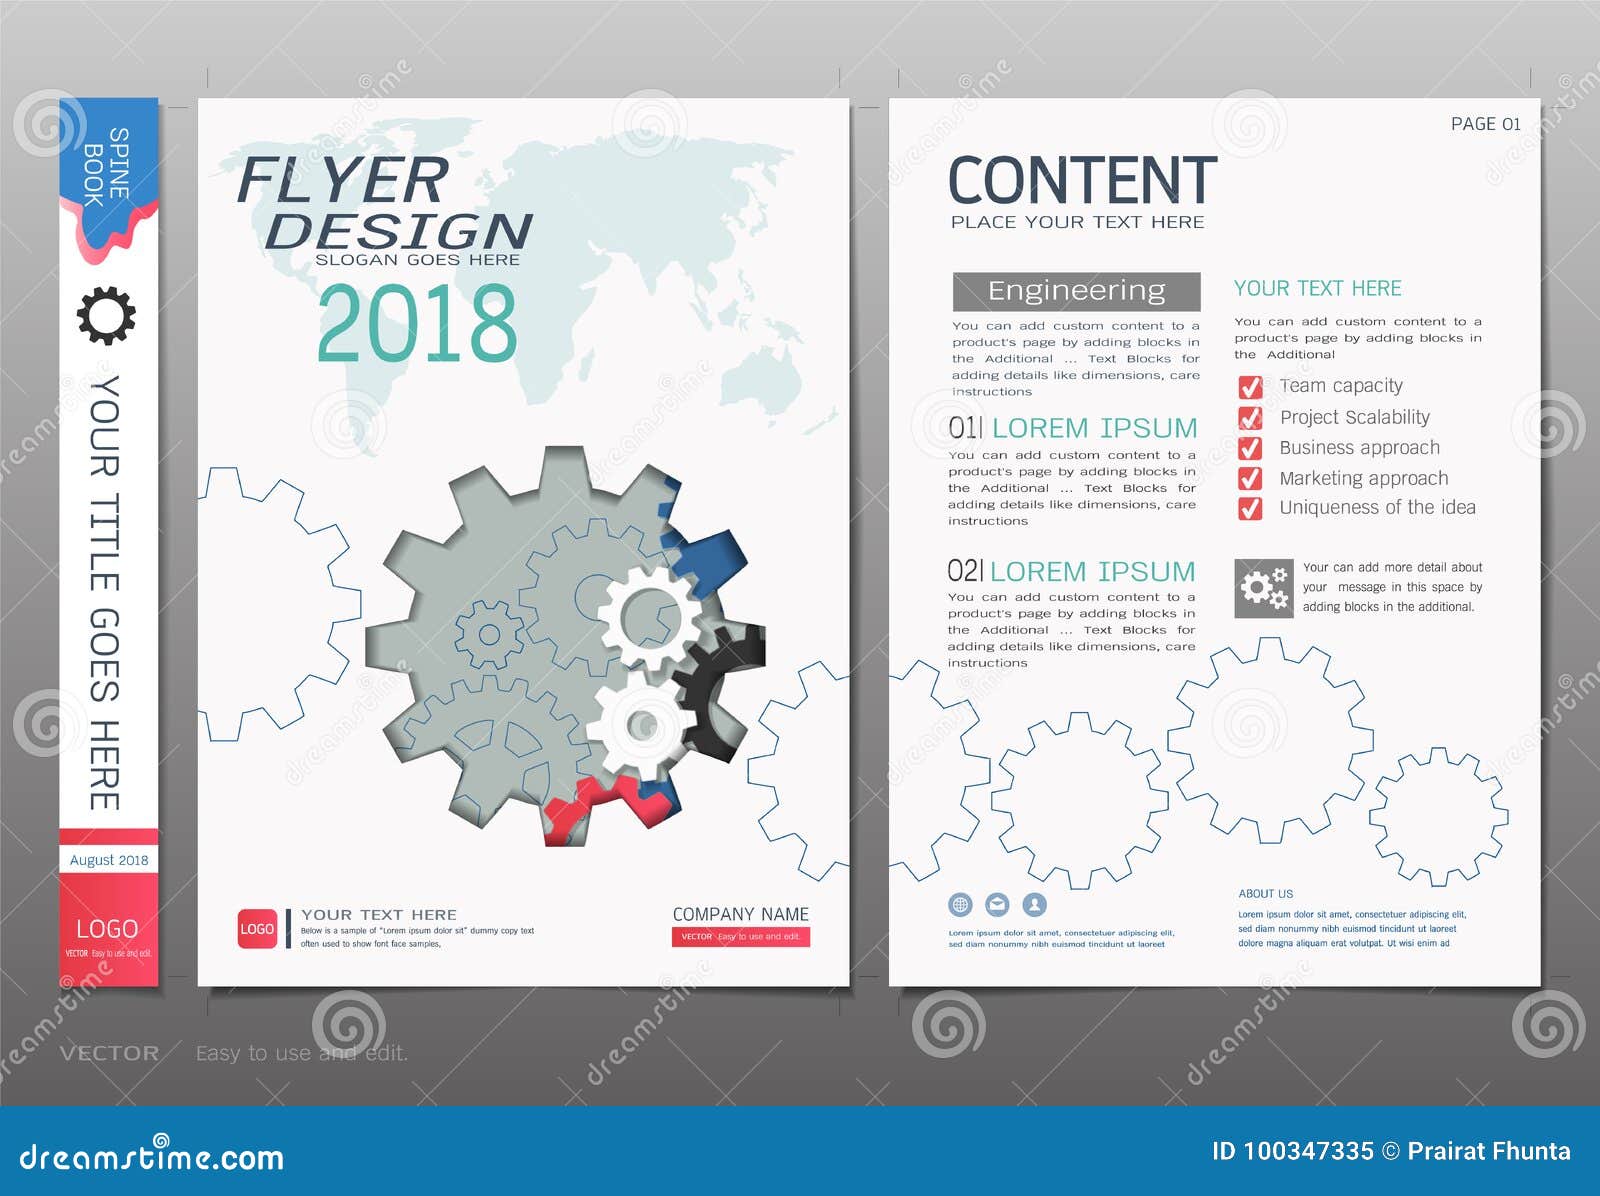 Covers Book Design Template Vector, Business Engineering Concepts Regarding Engineering Brochure Templates